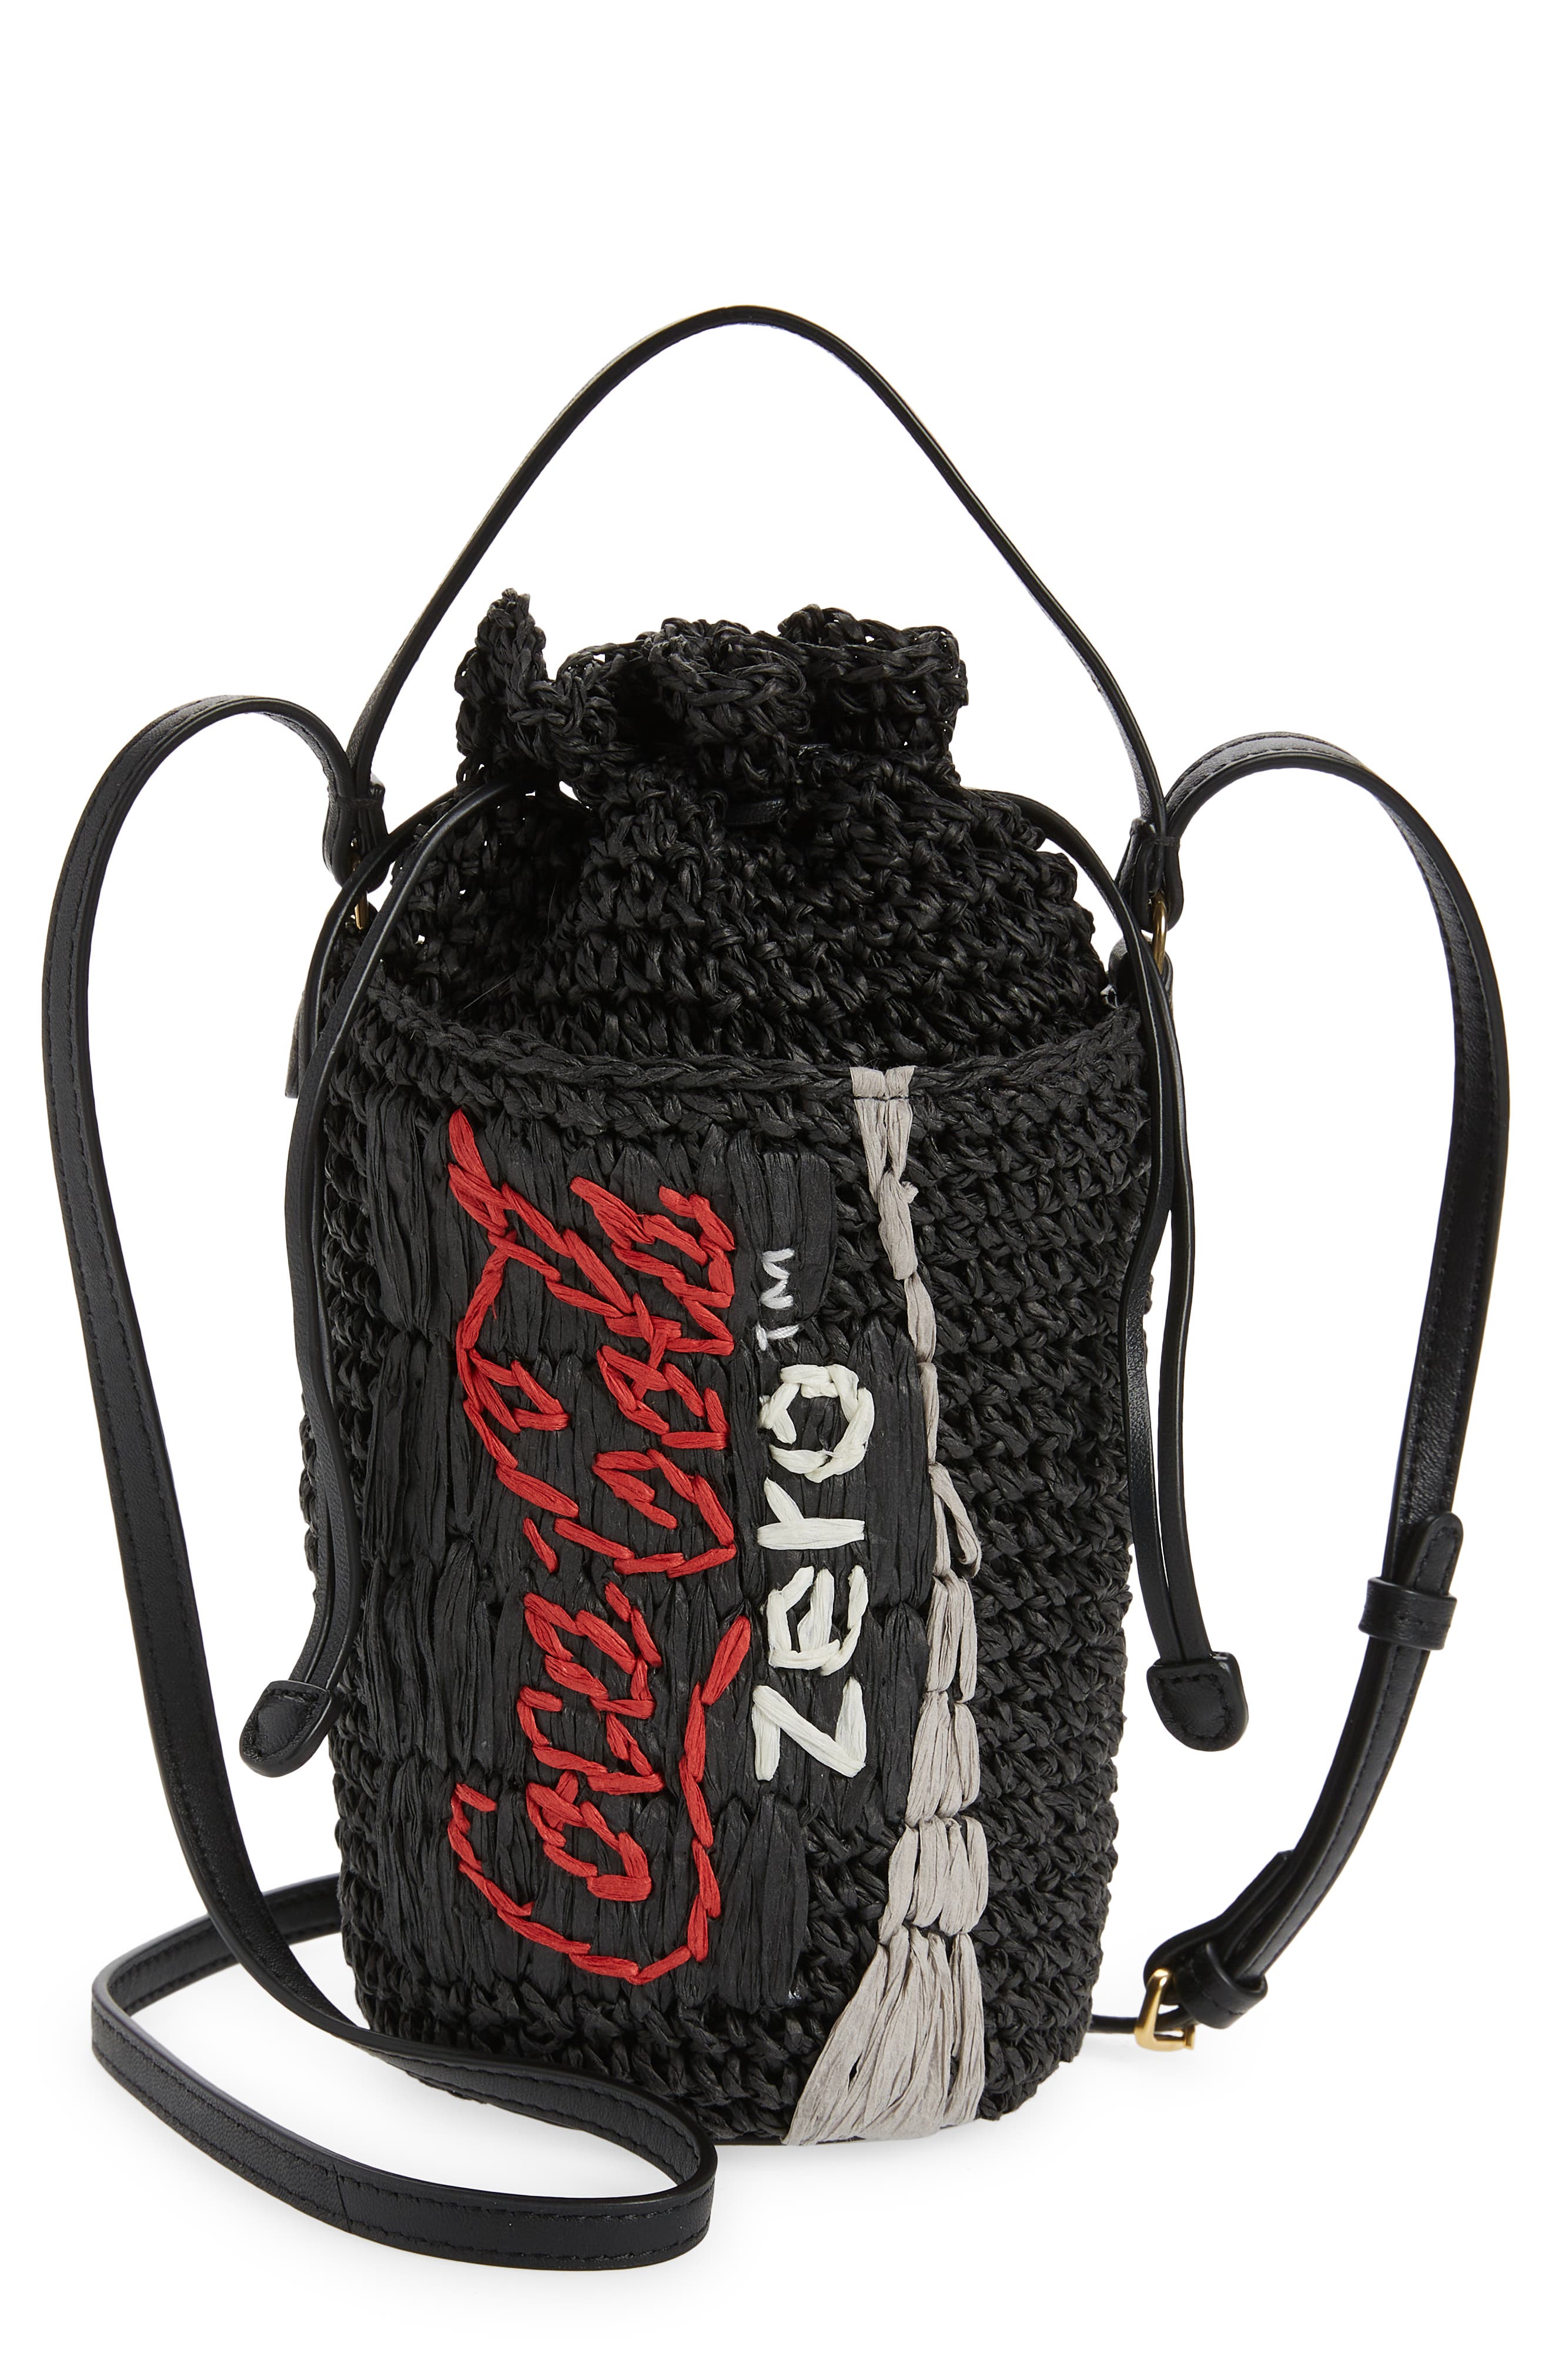 Anya Hindmarch x Coca-Cola(R) Coke Zero Crossbody Bag in Black